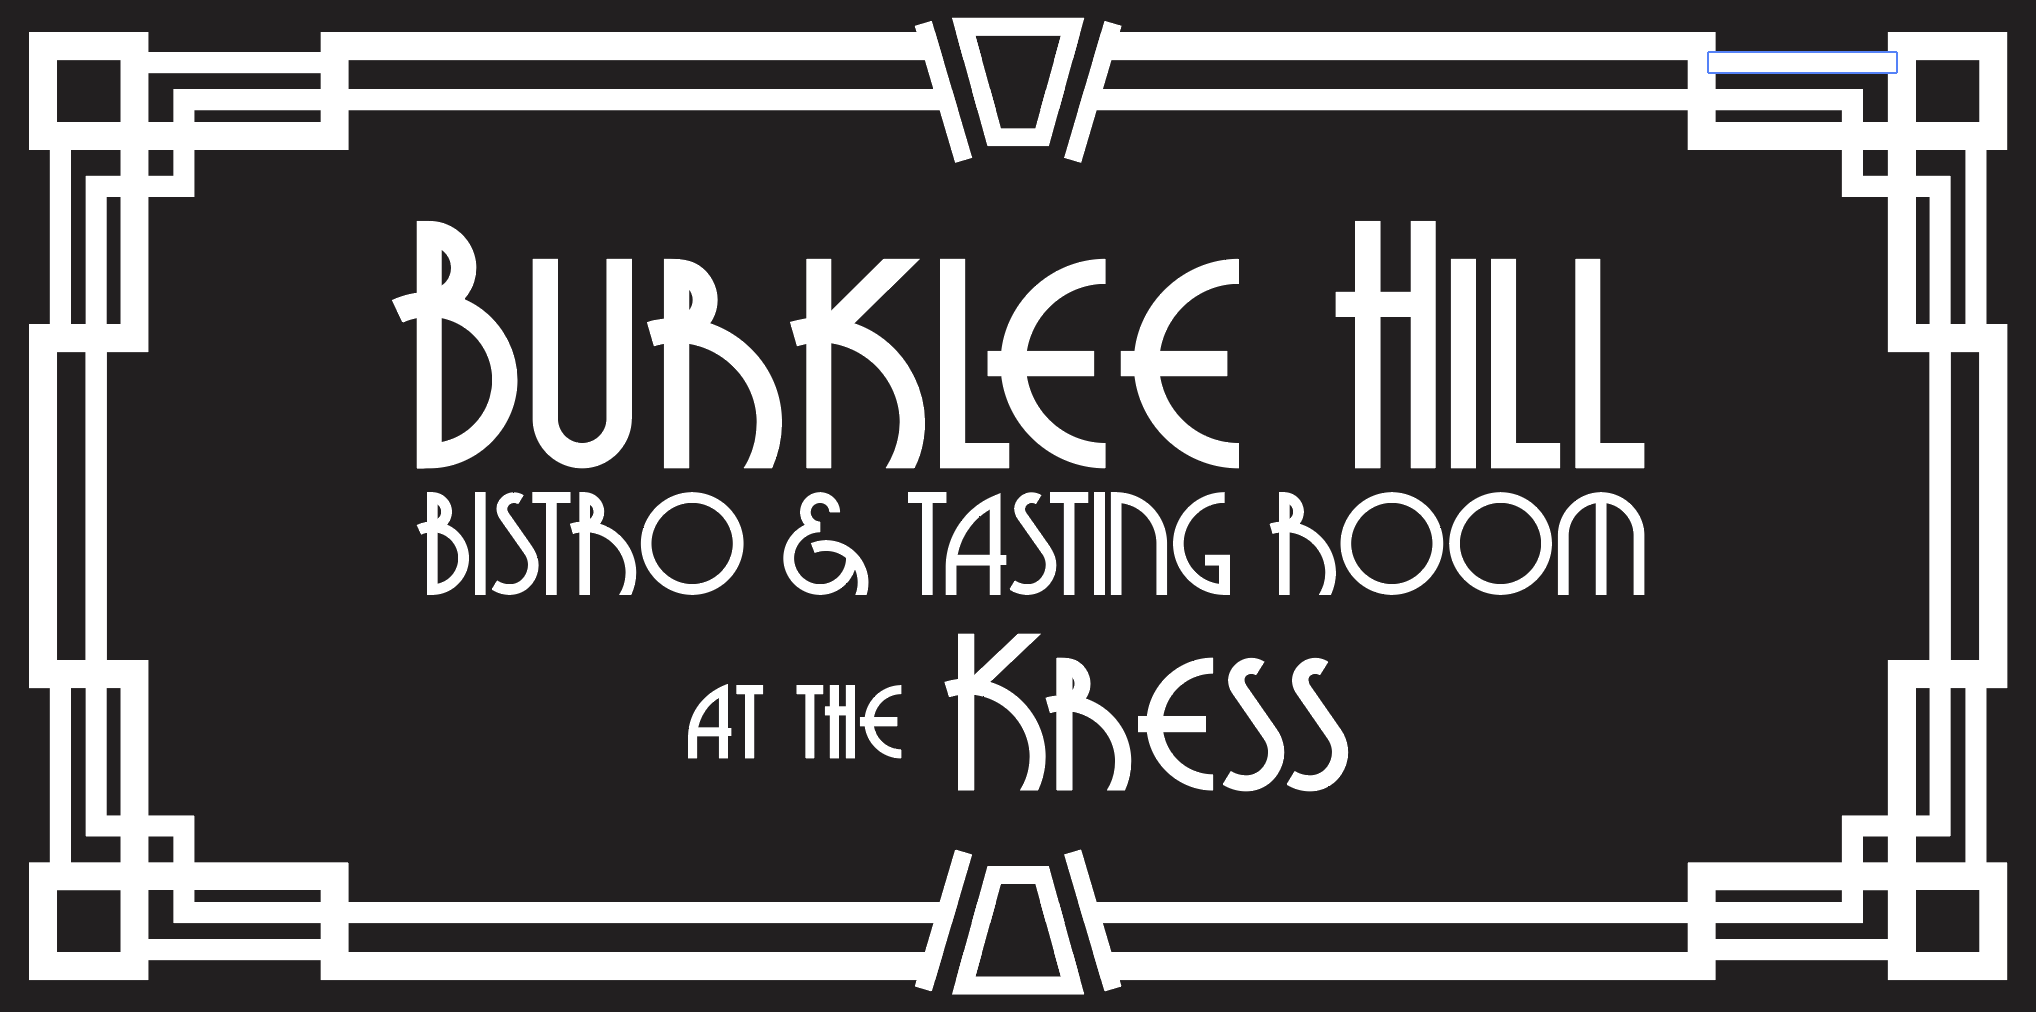 Burklee Hill Kress 2.png